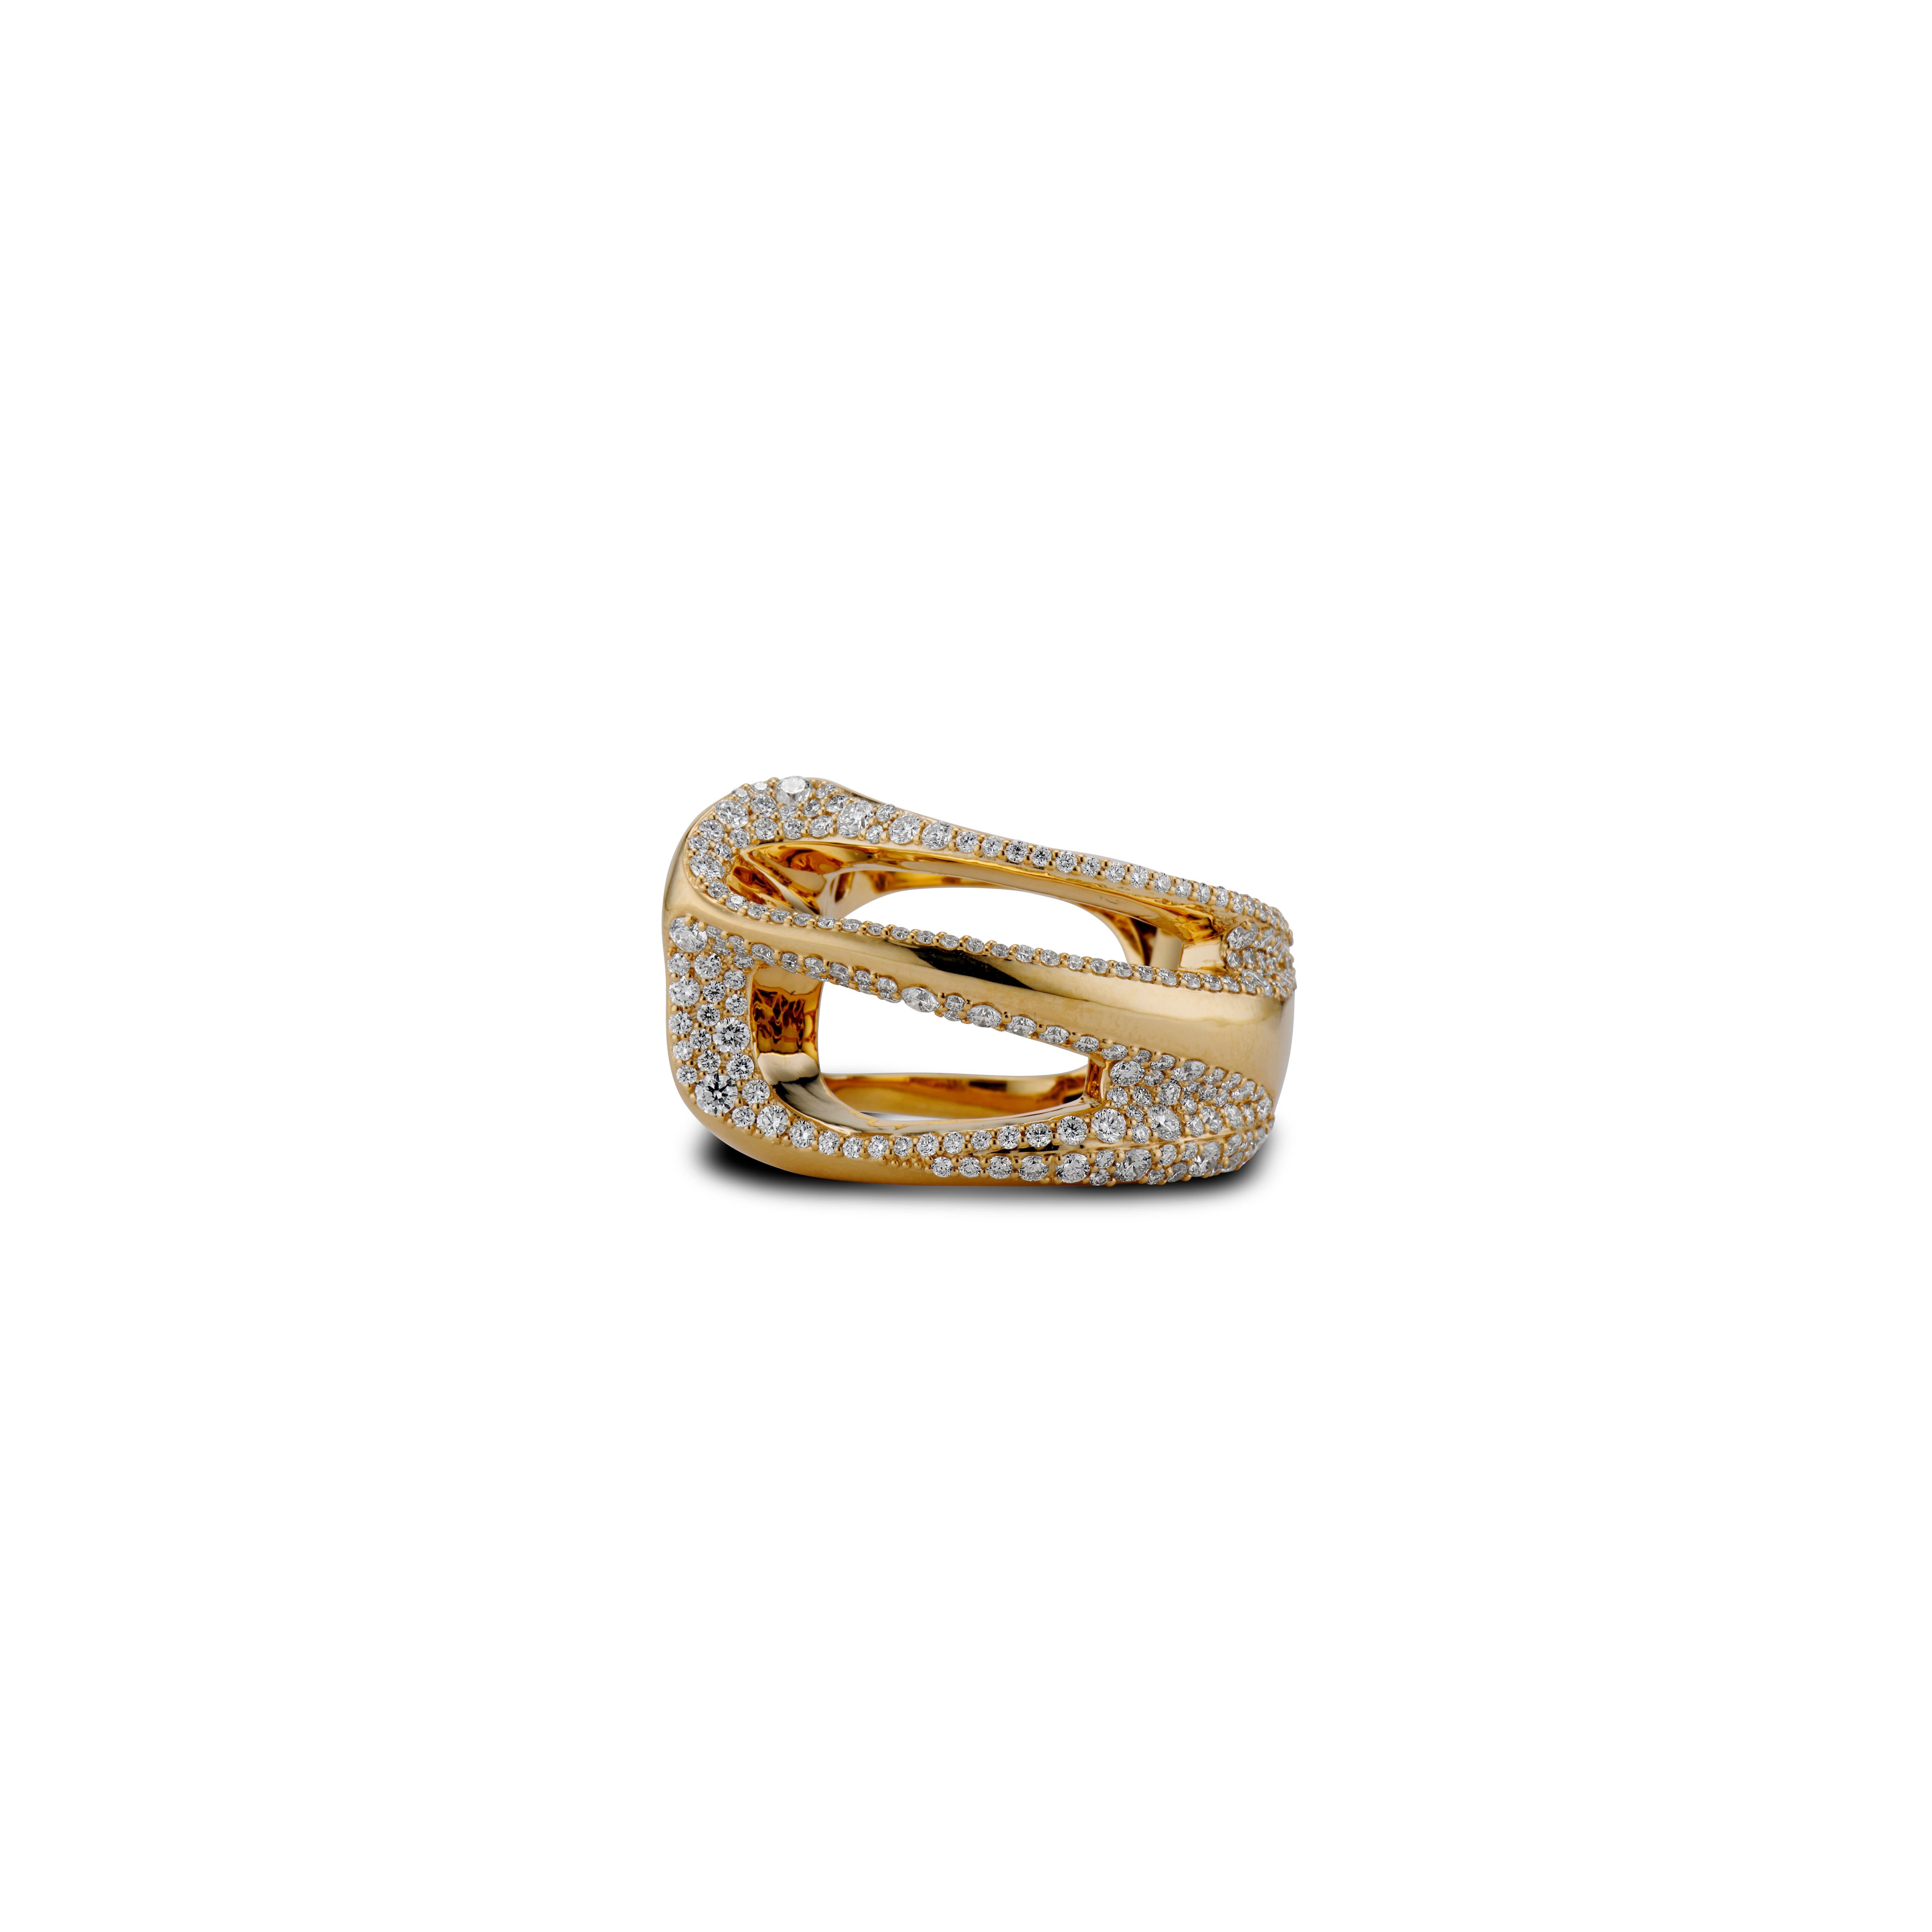 JV Insardi 18 Karat Gold Sculptural Ring with Blue Sapphires 5